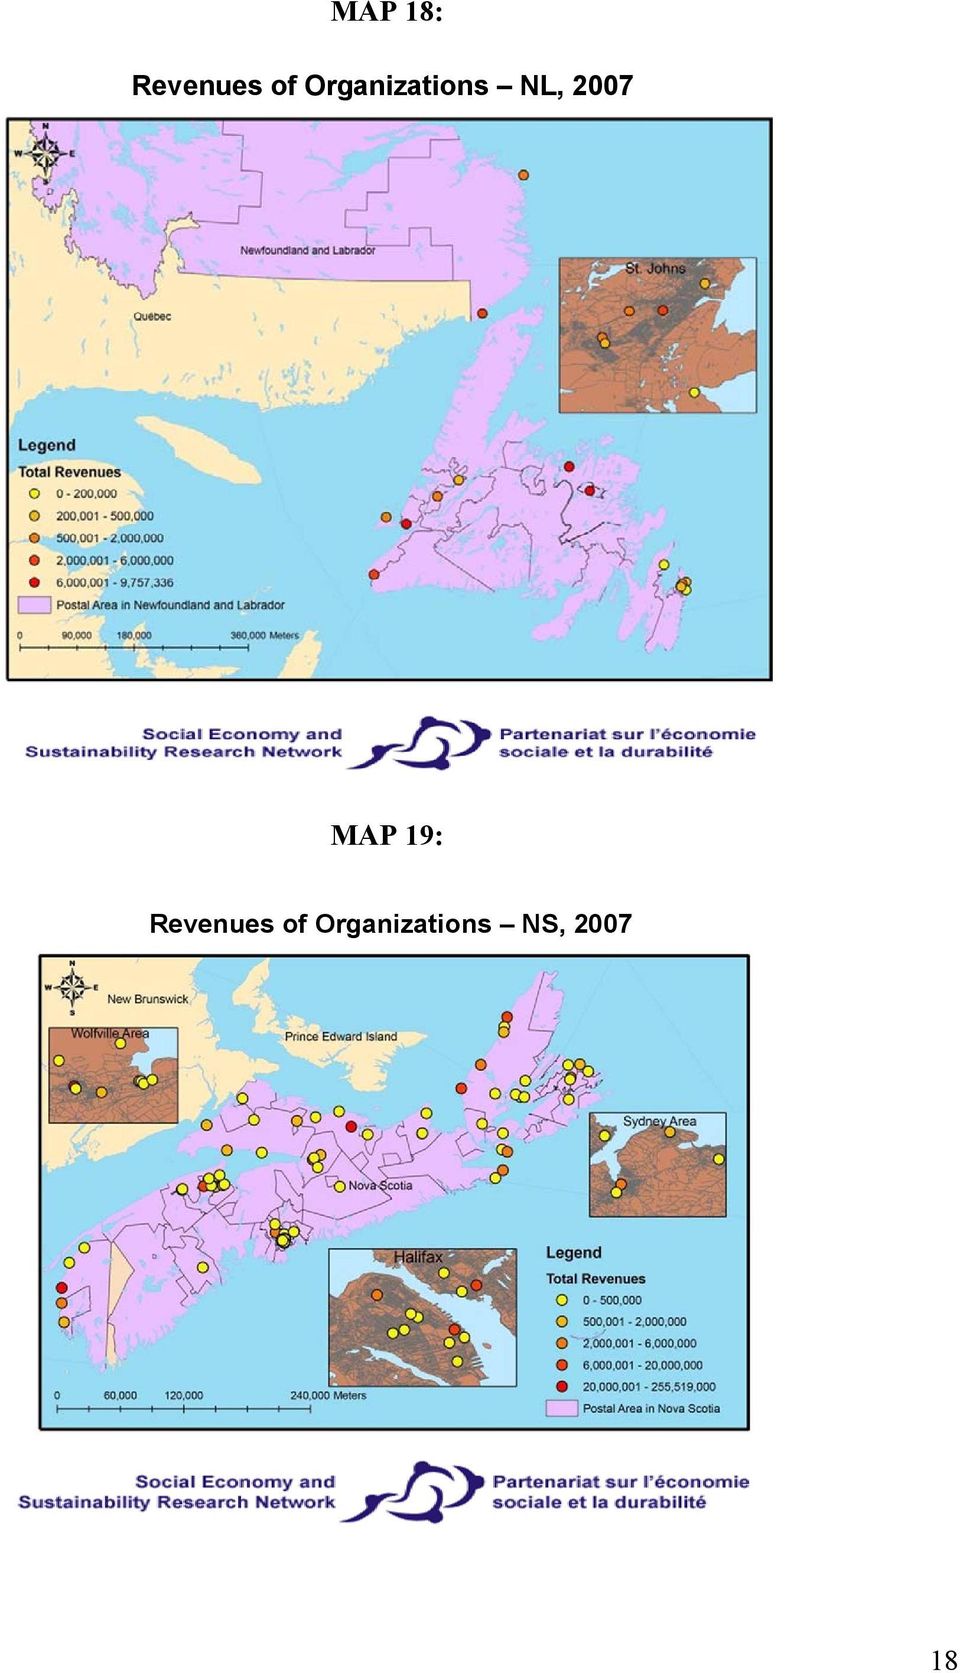 2007 MAP 19: Revenues